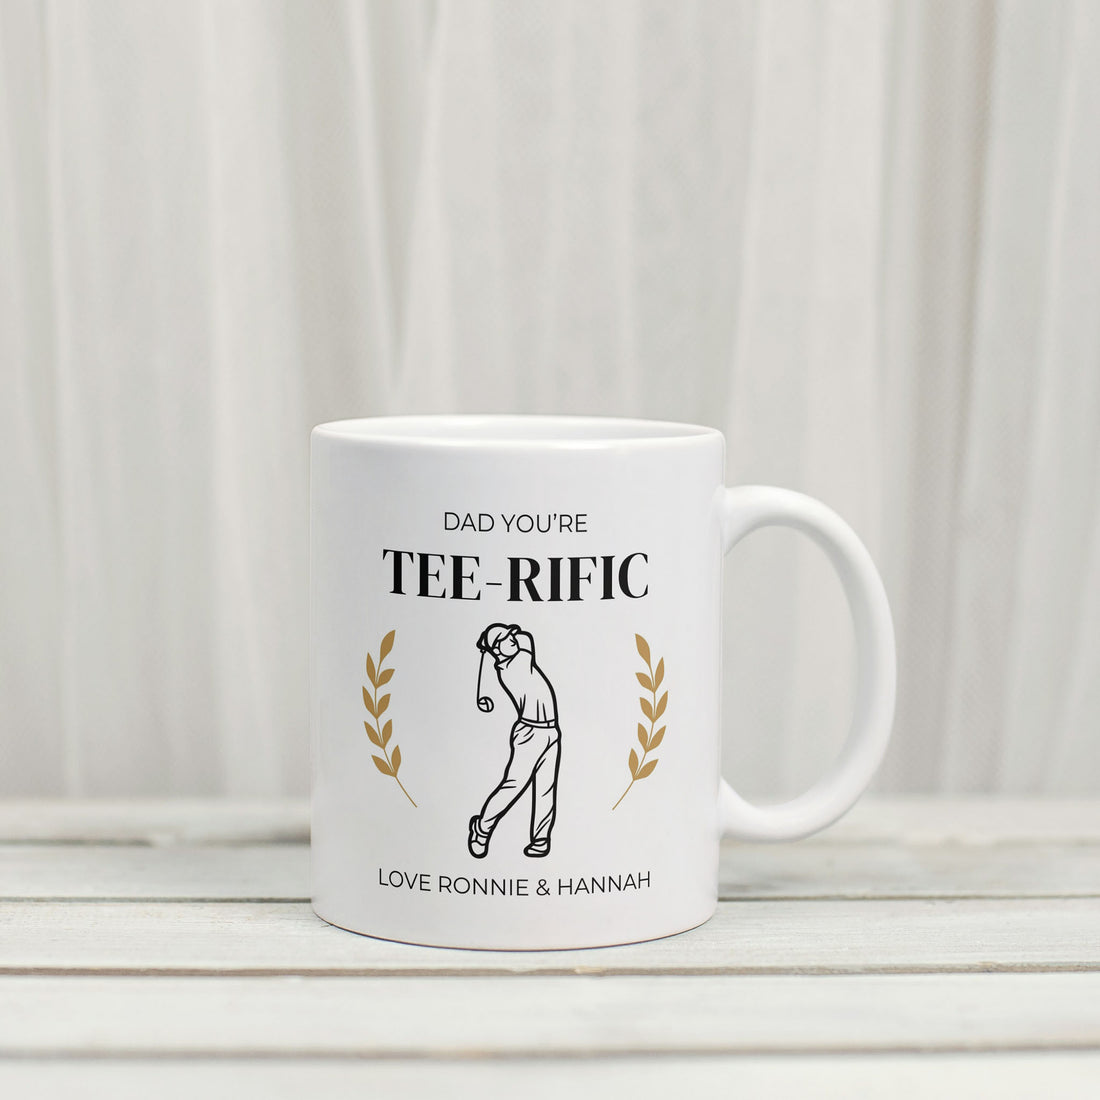 Personalised golf mug